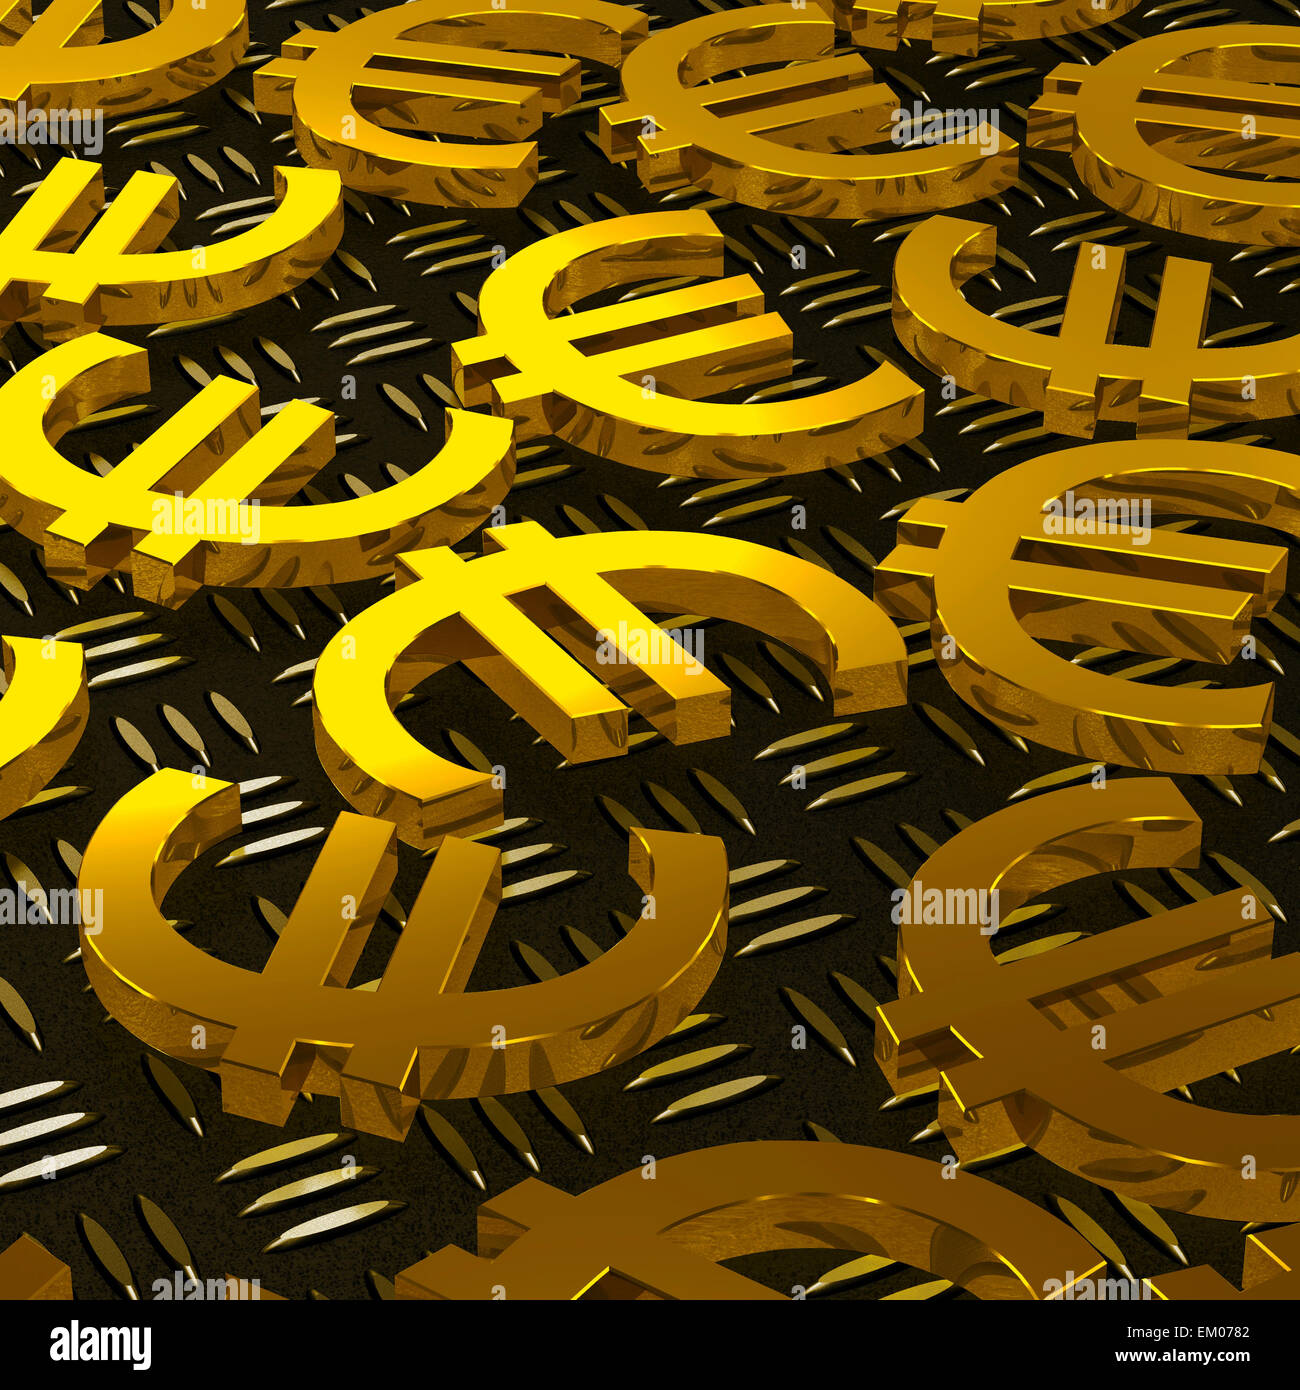 Euro Symbols On Floor Shows European Prosperity Stock Photo